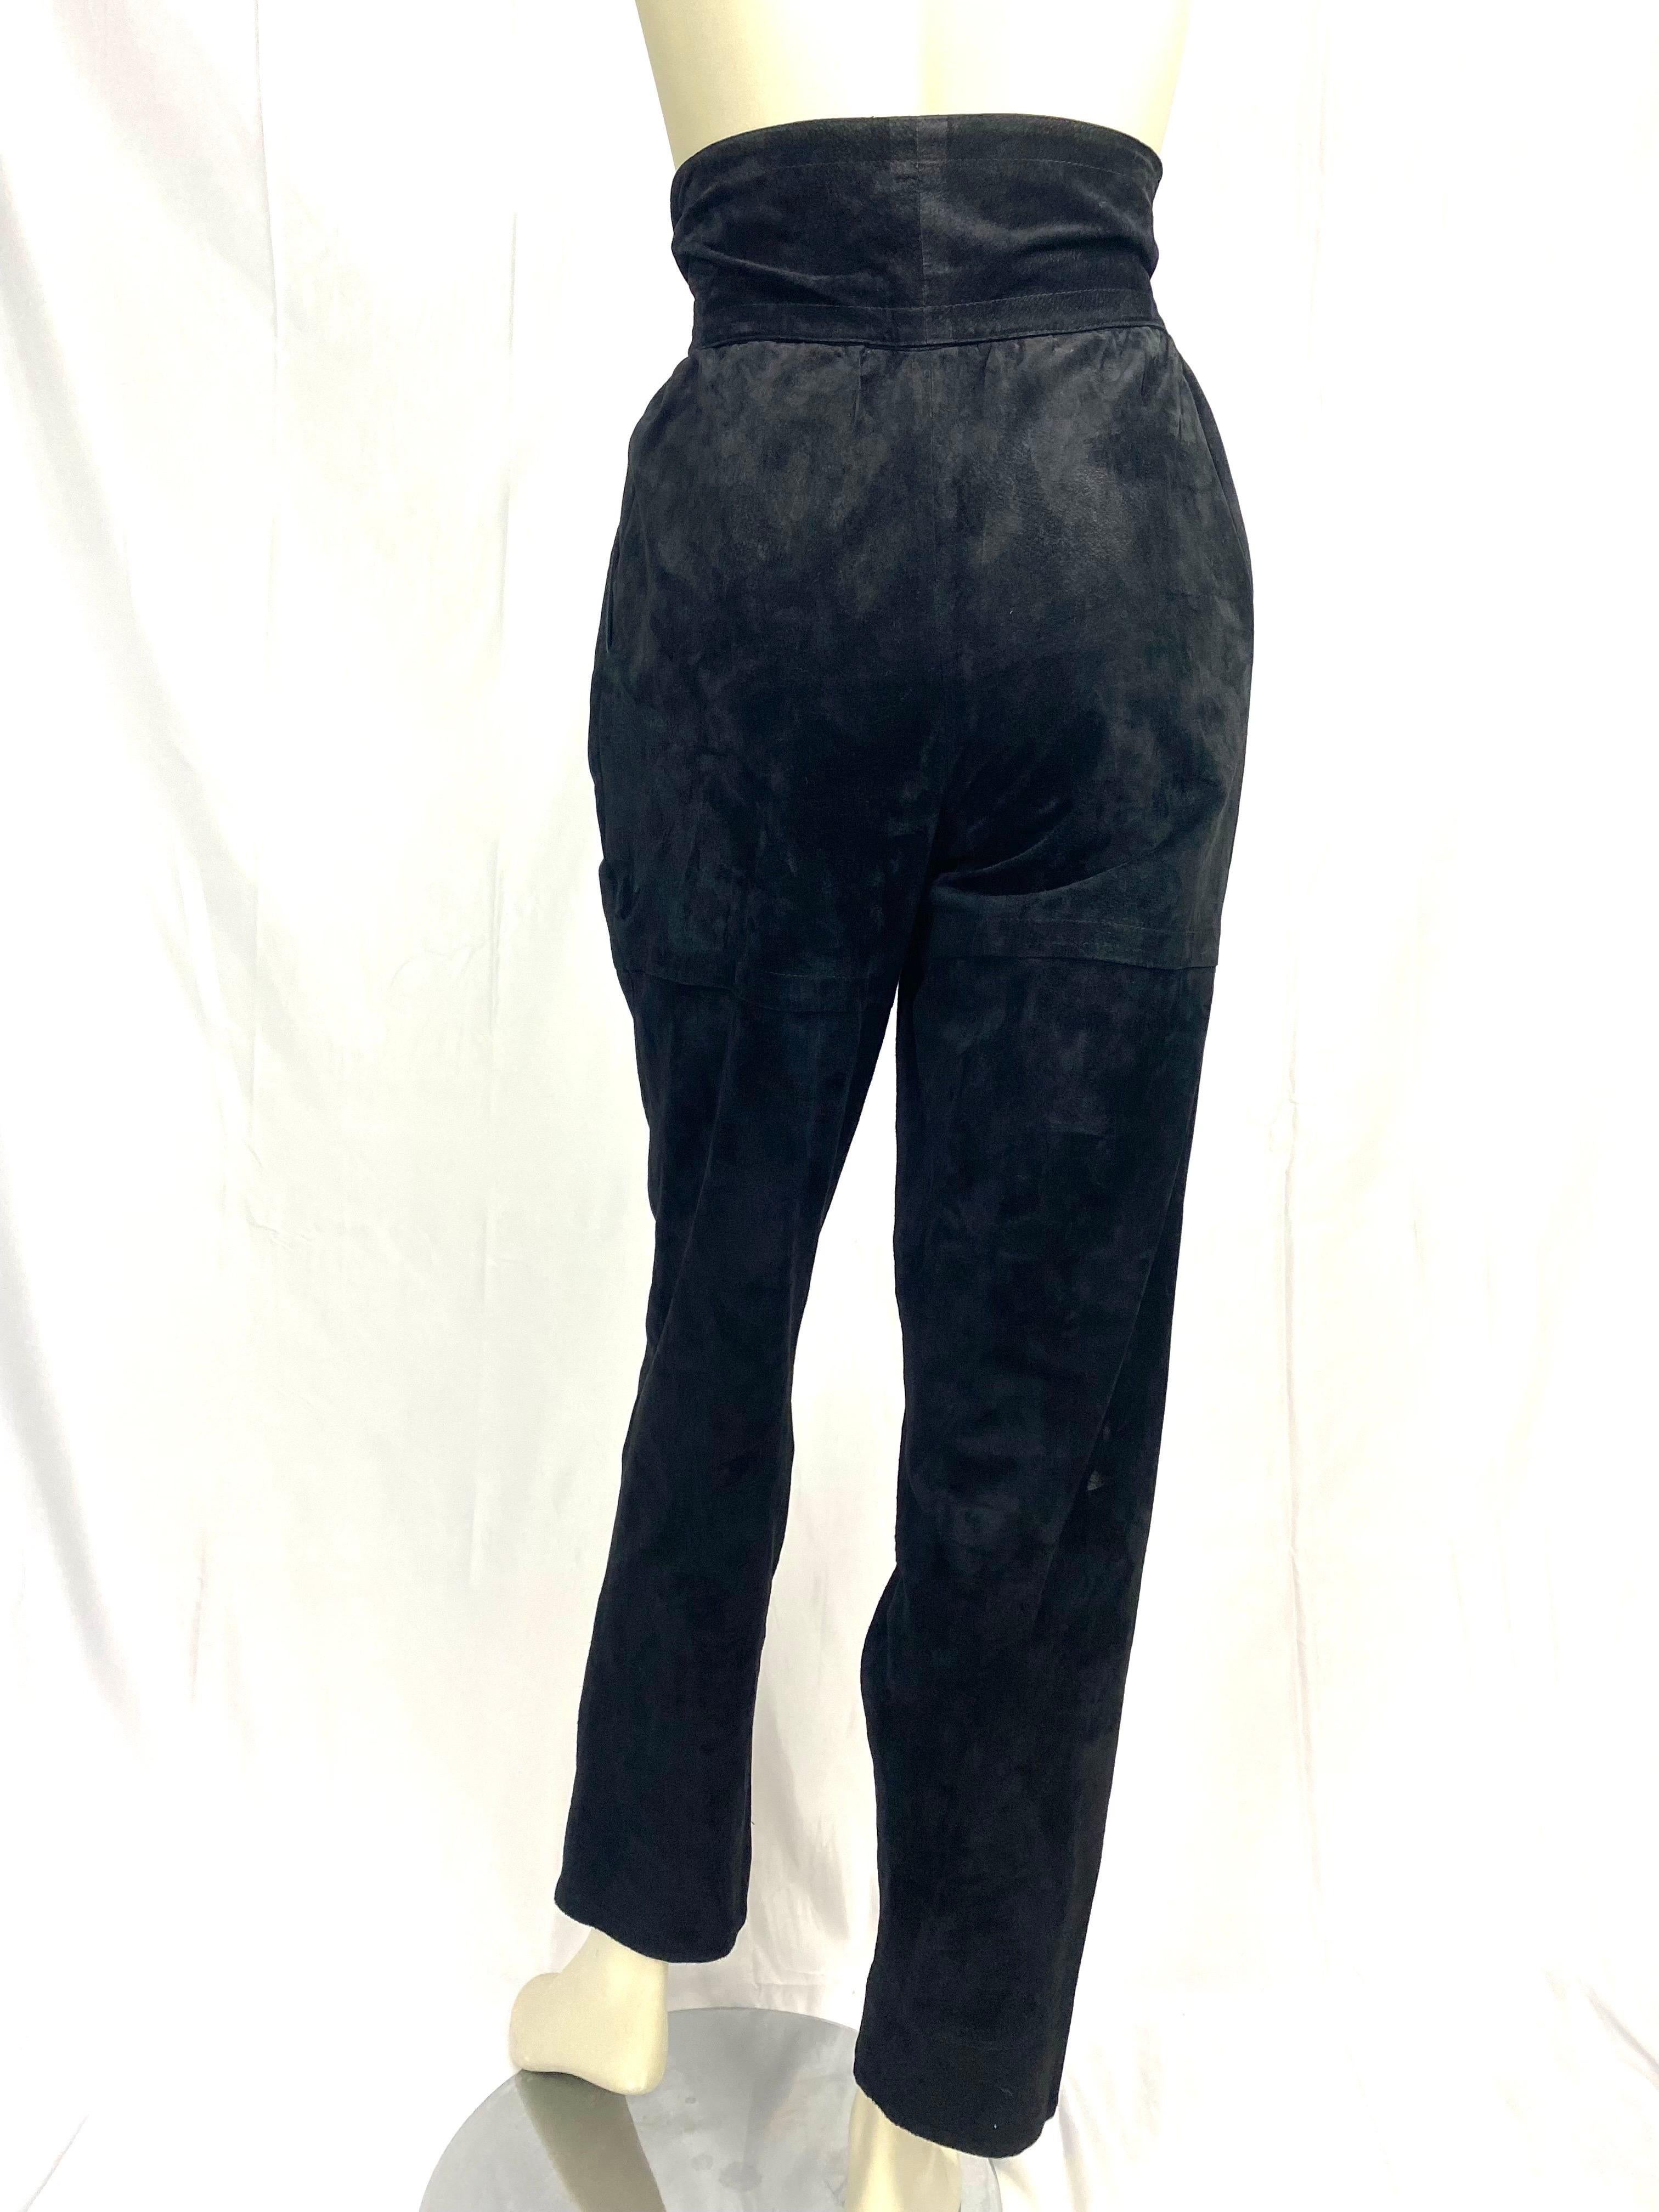 Vintage Yves saint laurent 1980's black suede leather high waisted harem pants For Sale 1